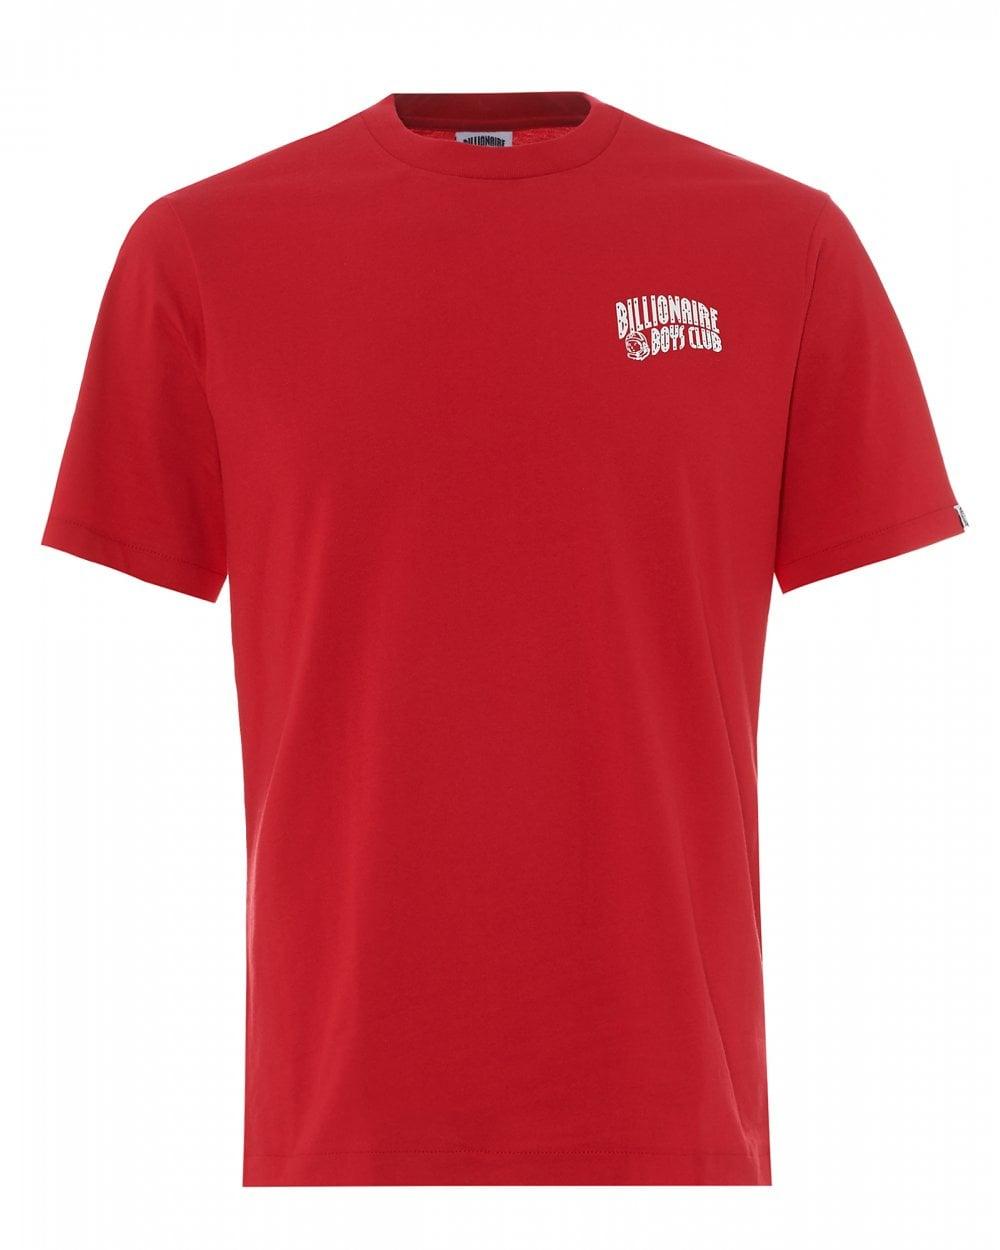 Red Arch Logo - Billionaire Boys Club Mens Arch Logo T-Shirt, Red Regular Fit Tee